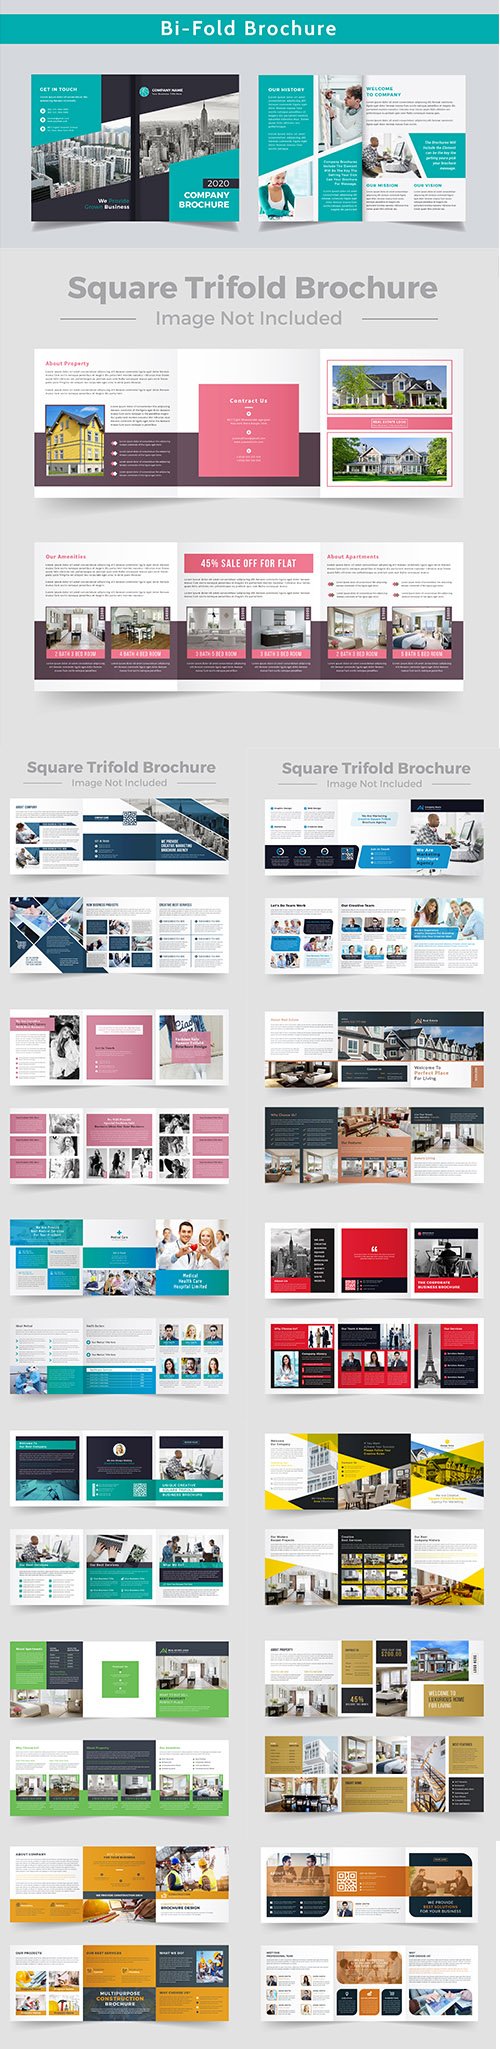 Square Trifold Business Brochure Design Template